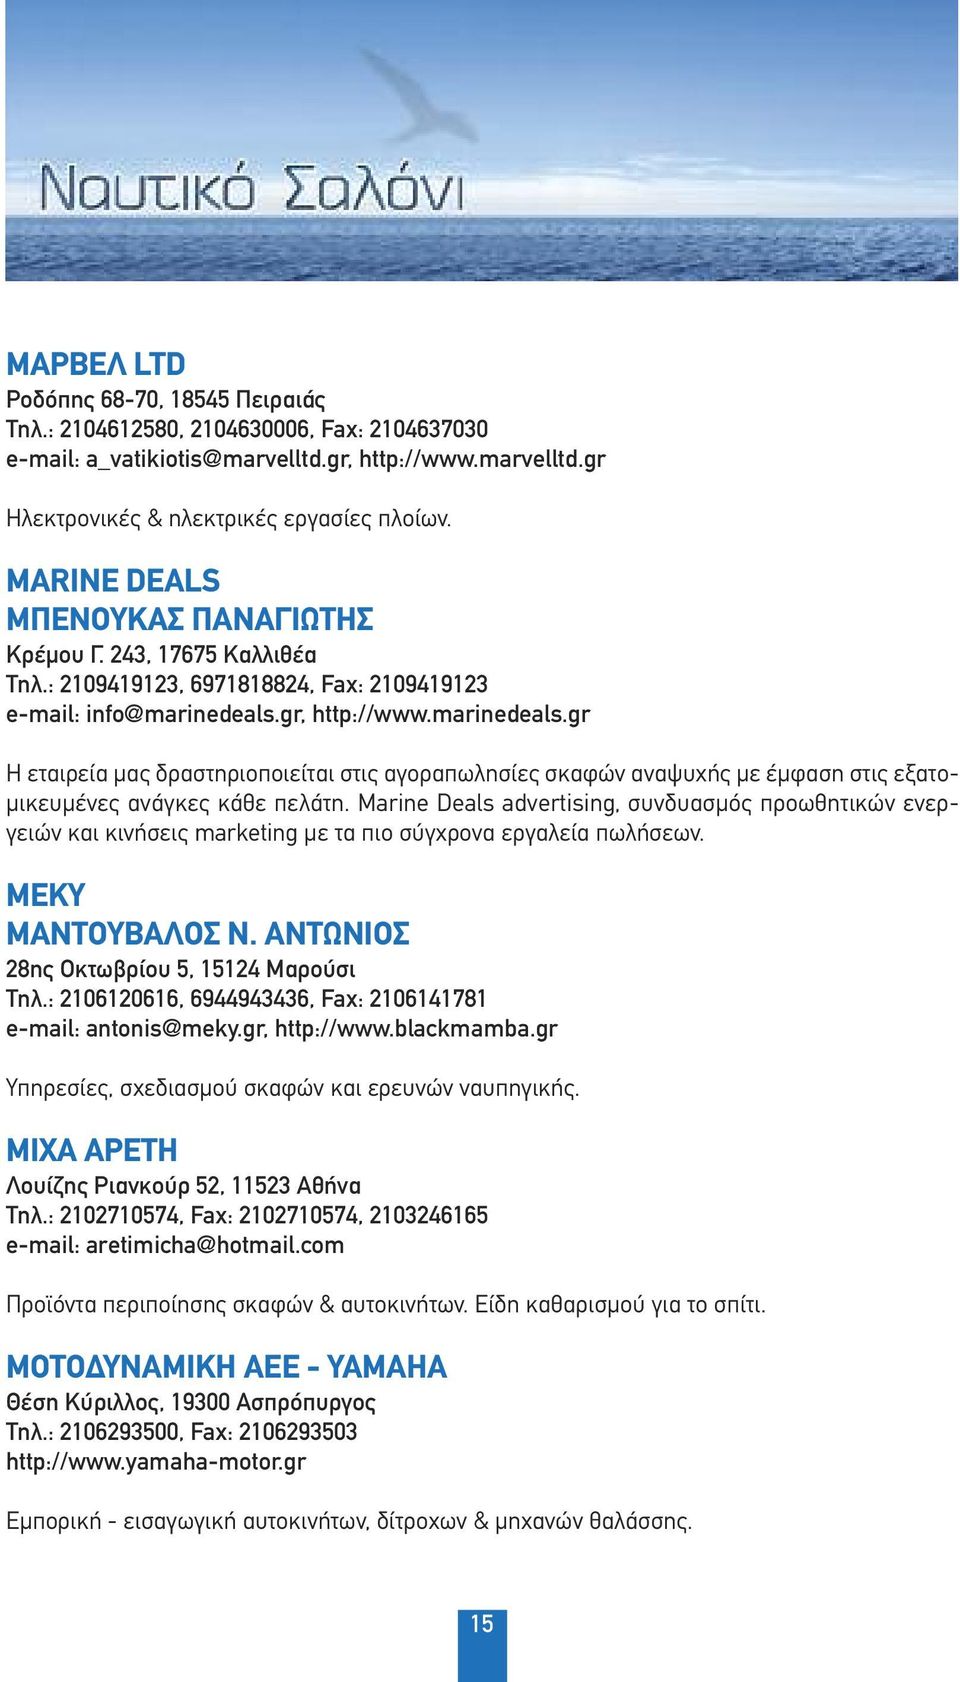 gr, http://www.marinedeals.gr Η εταιρεία μας δραστηριοποιείται στις αγοραπωλησίες σκαφών αναψυχής με έμφαση στις εξατομικευμένες ανάγκες κάθε πελάτη.